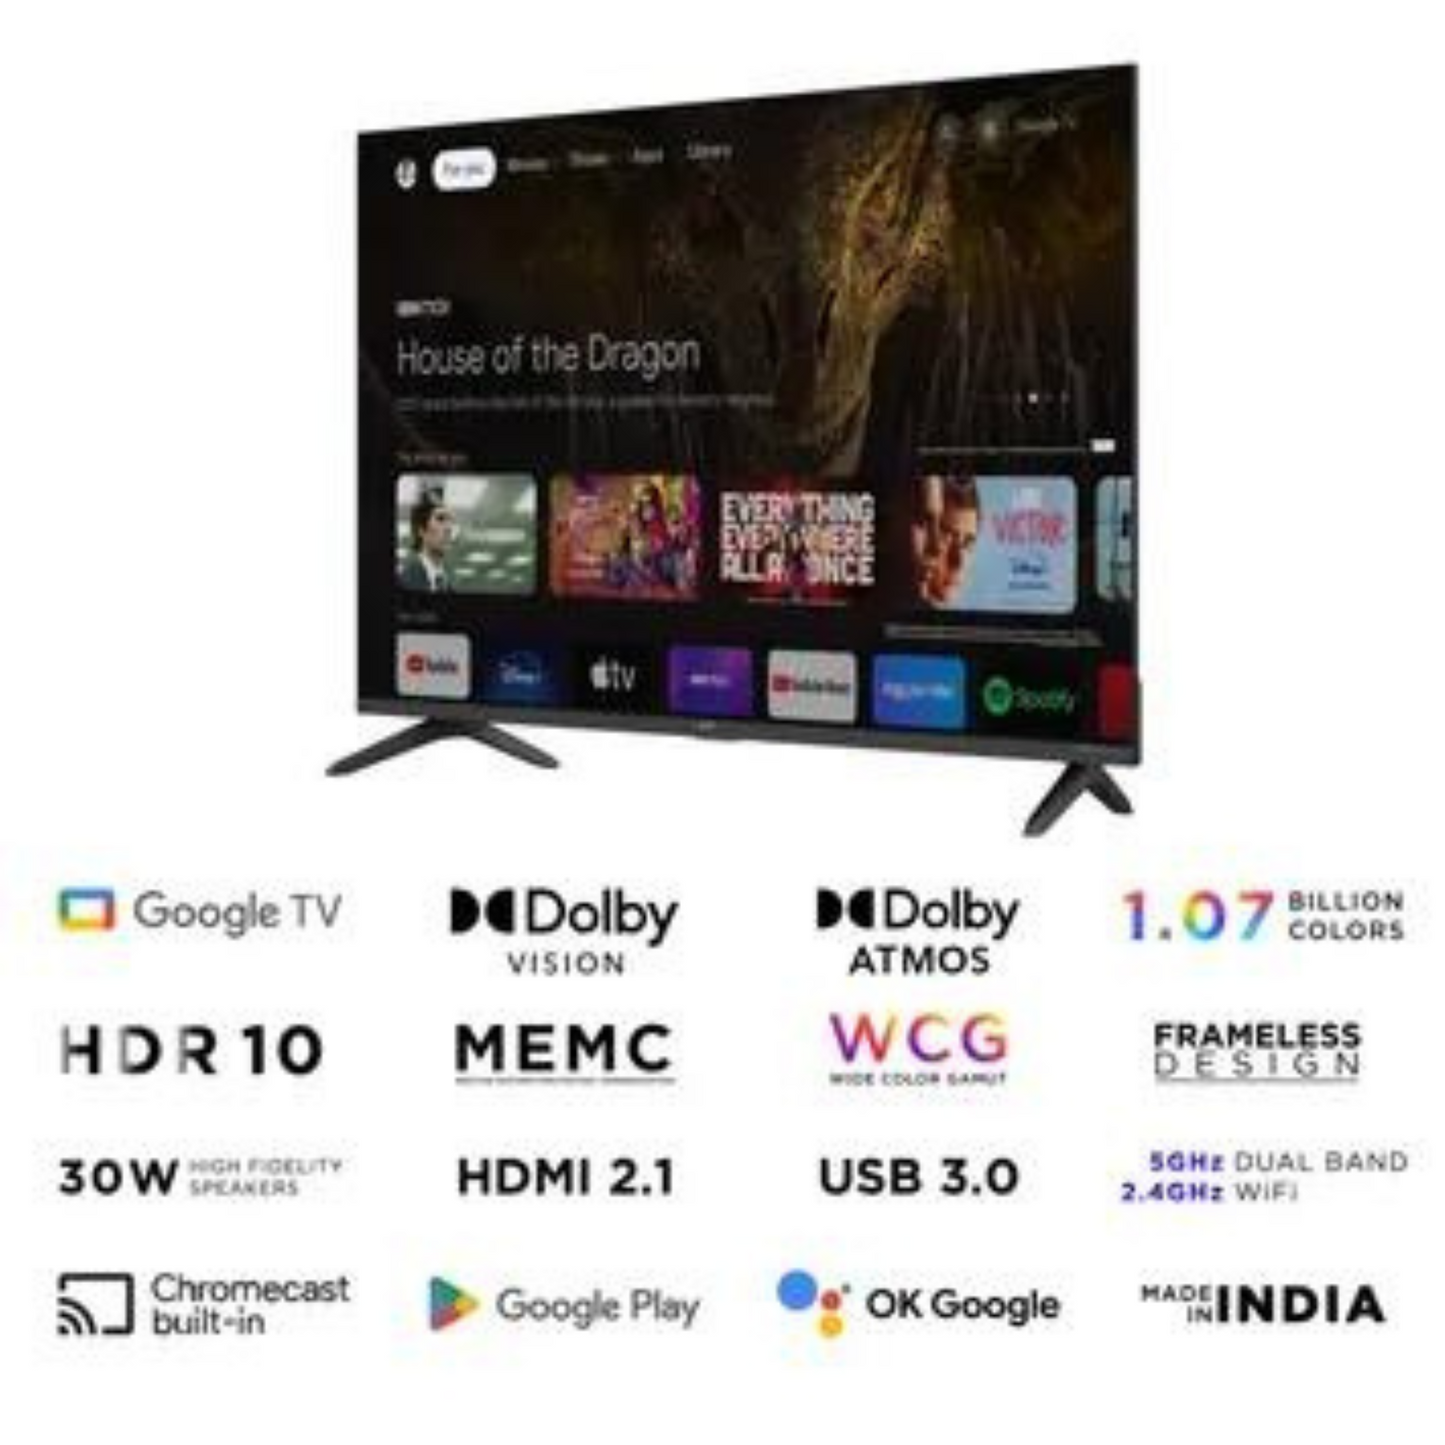 Aura (50 inch) UHD Google TV with Dolby Atmos (2 Year Warranty)